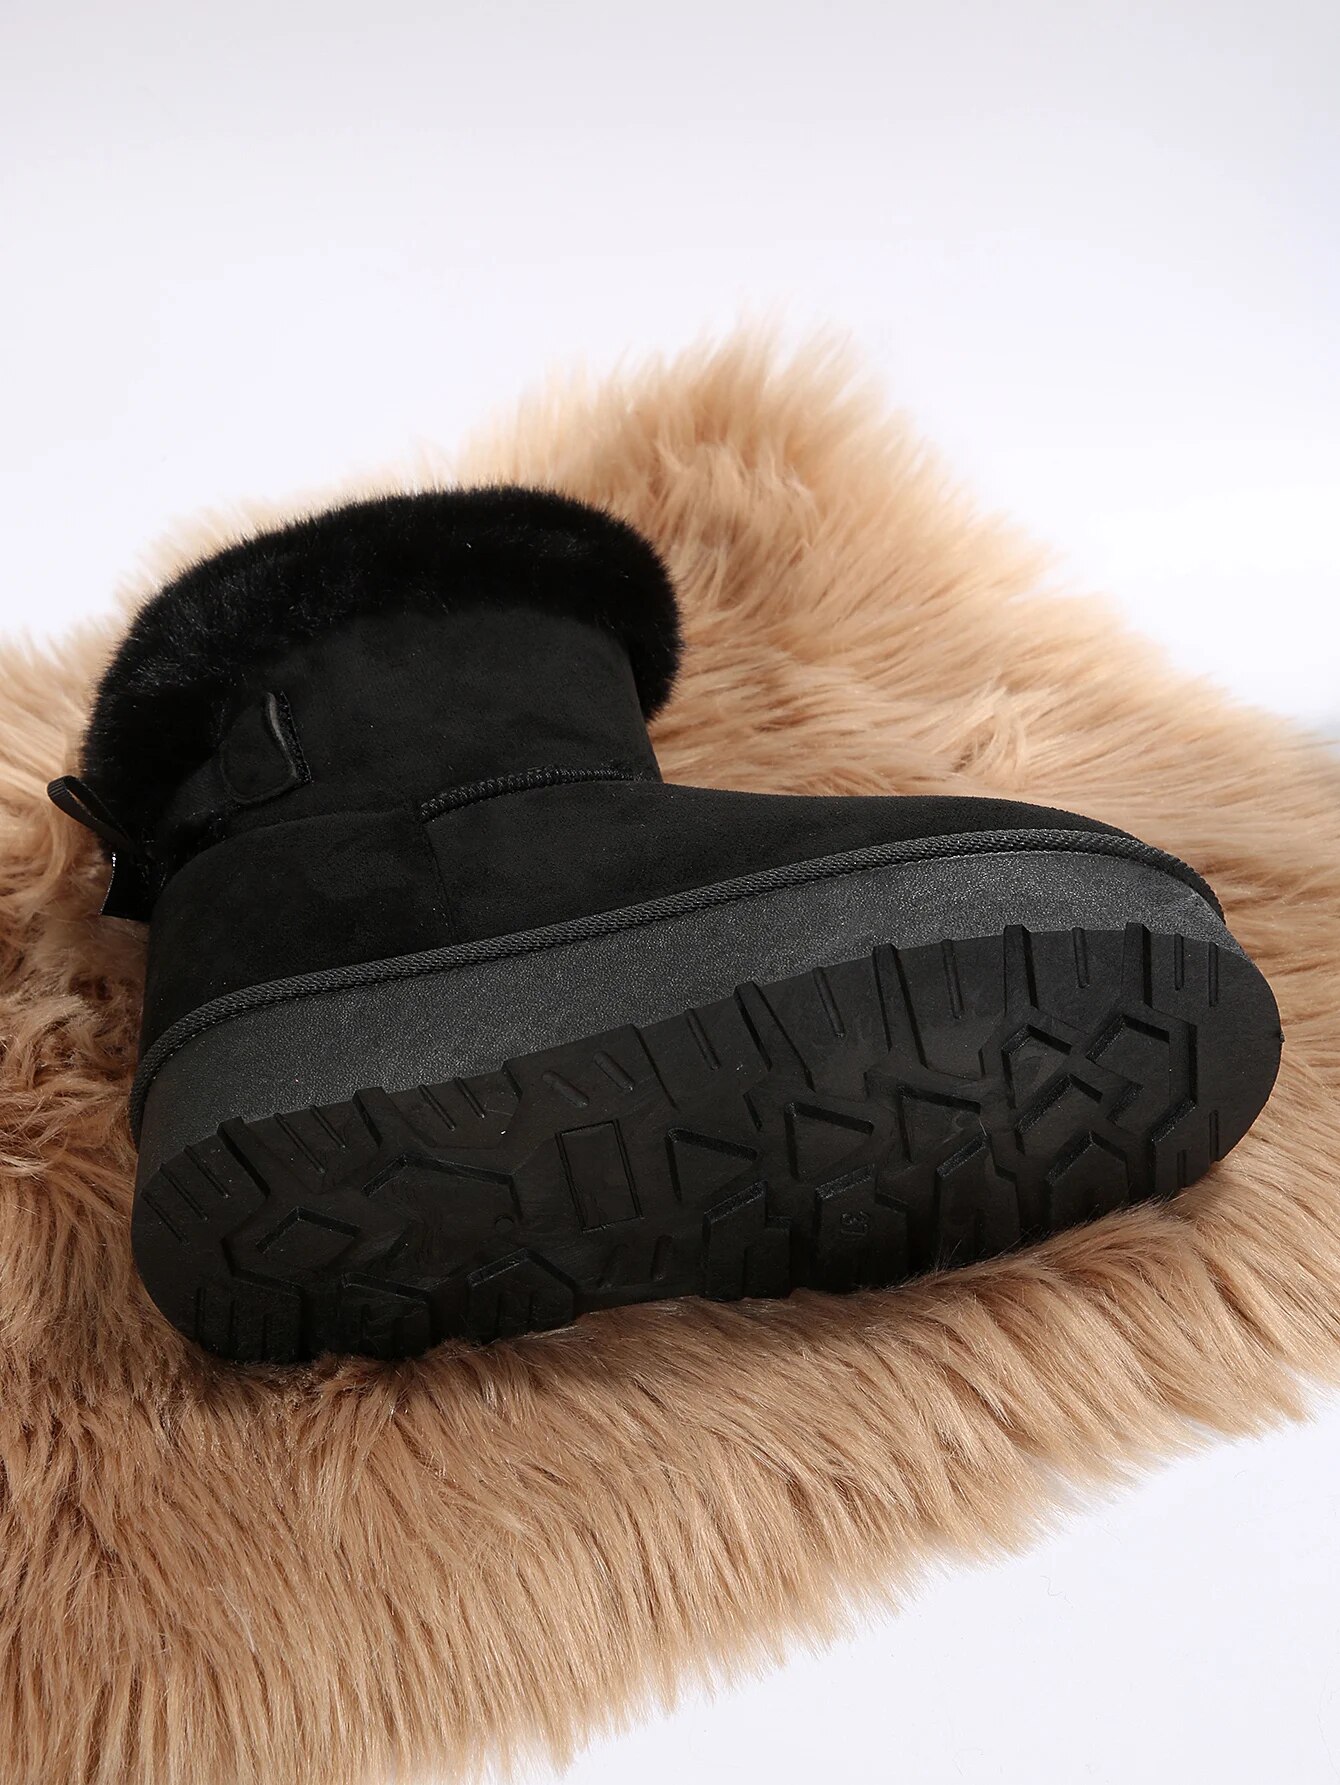 come4buy.com-Bowknot Cashmere Warm Boots Women Snow Boots